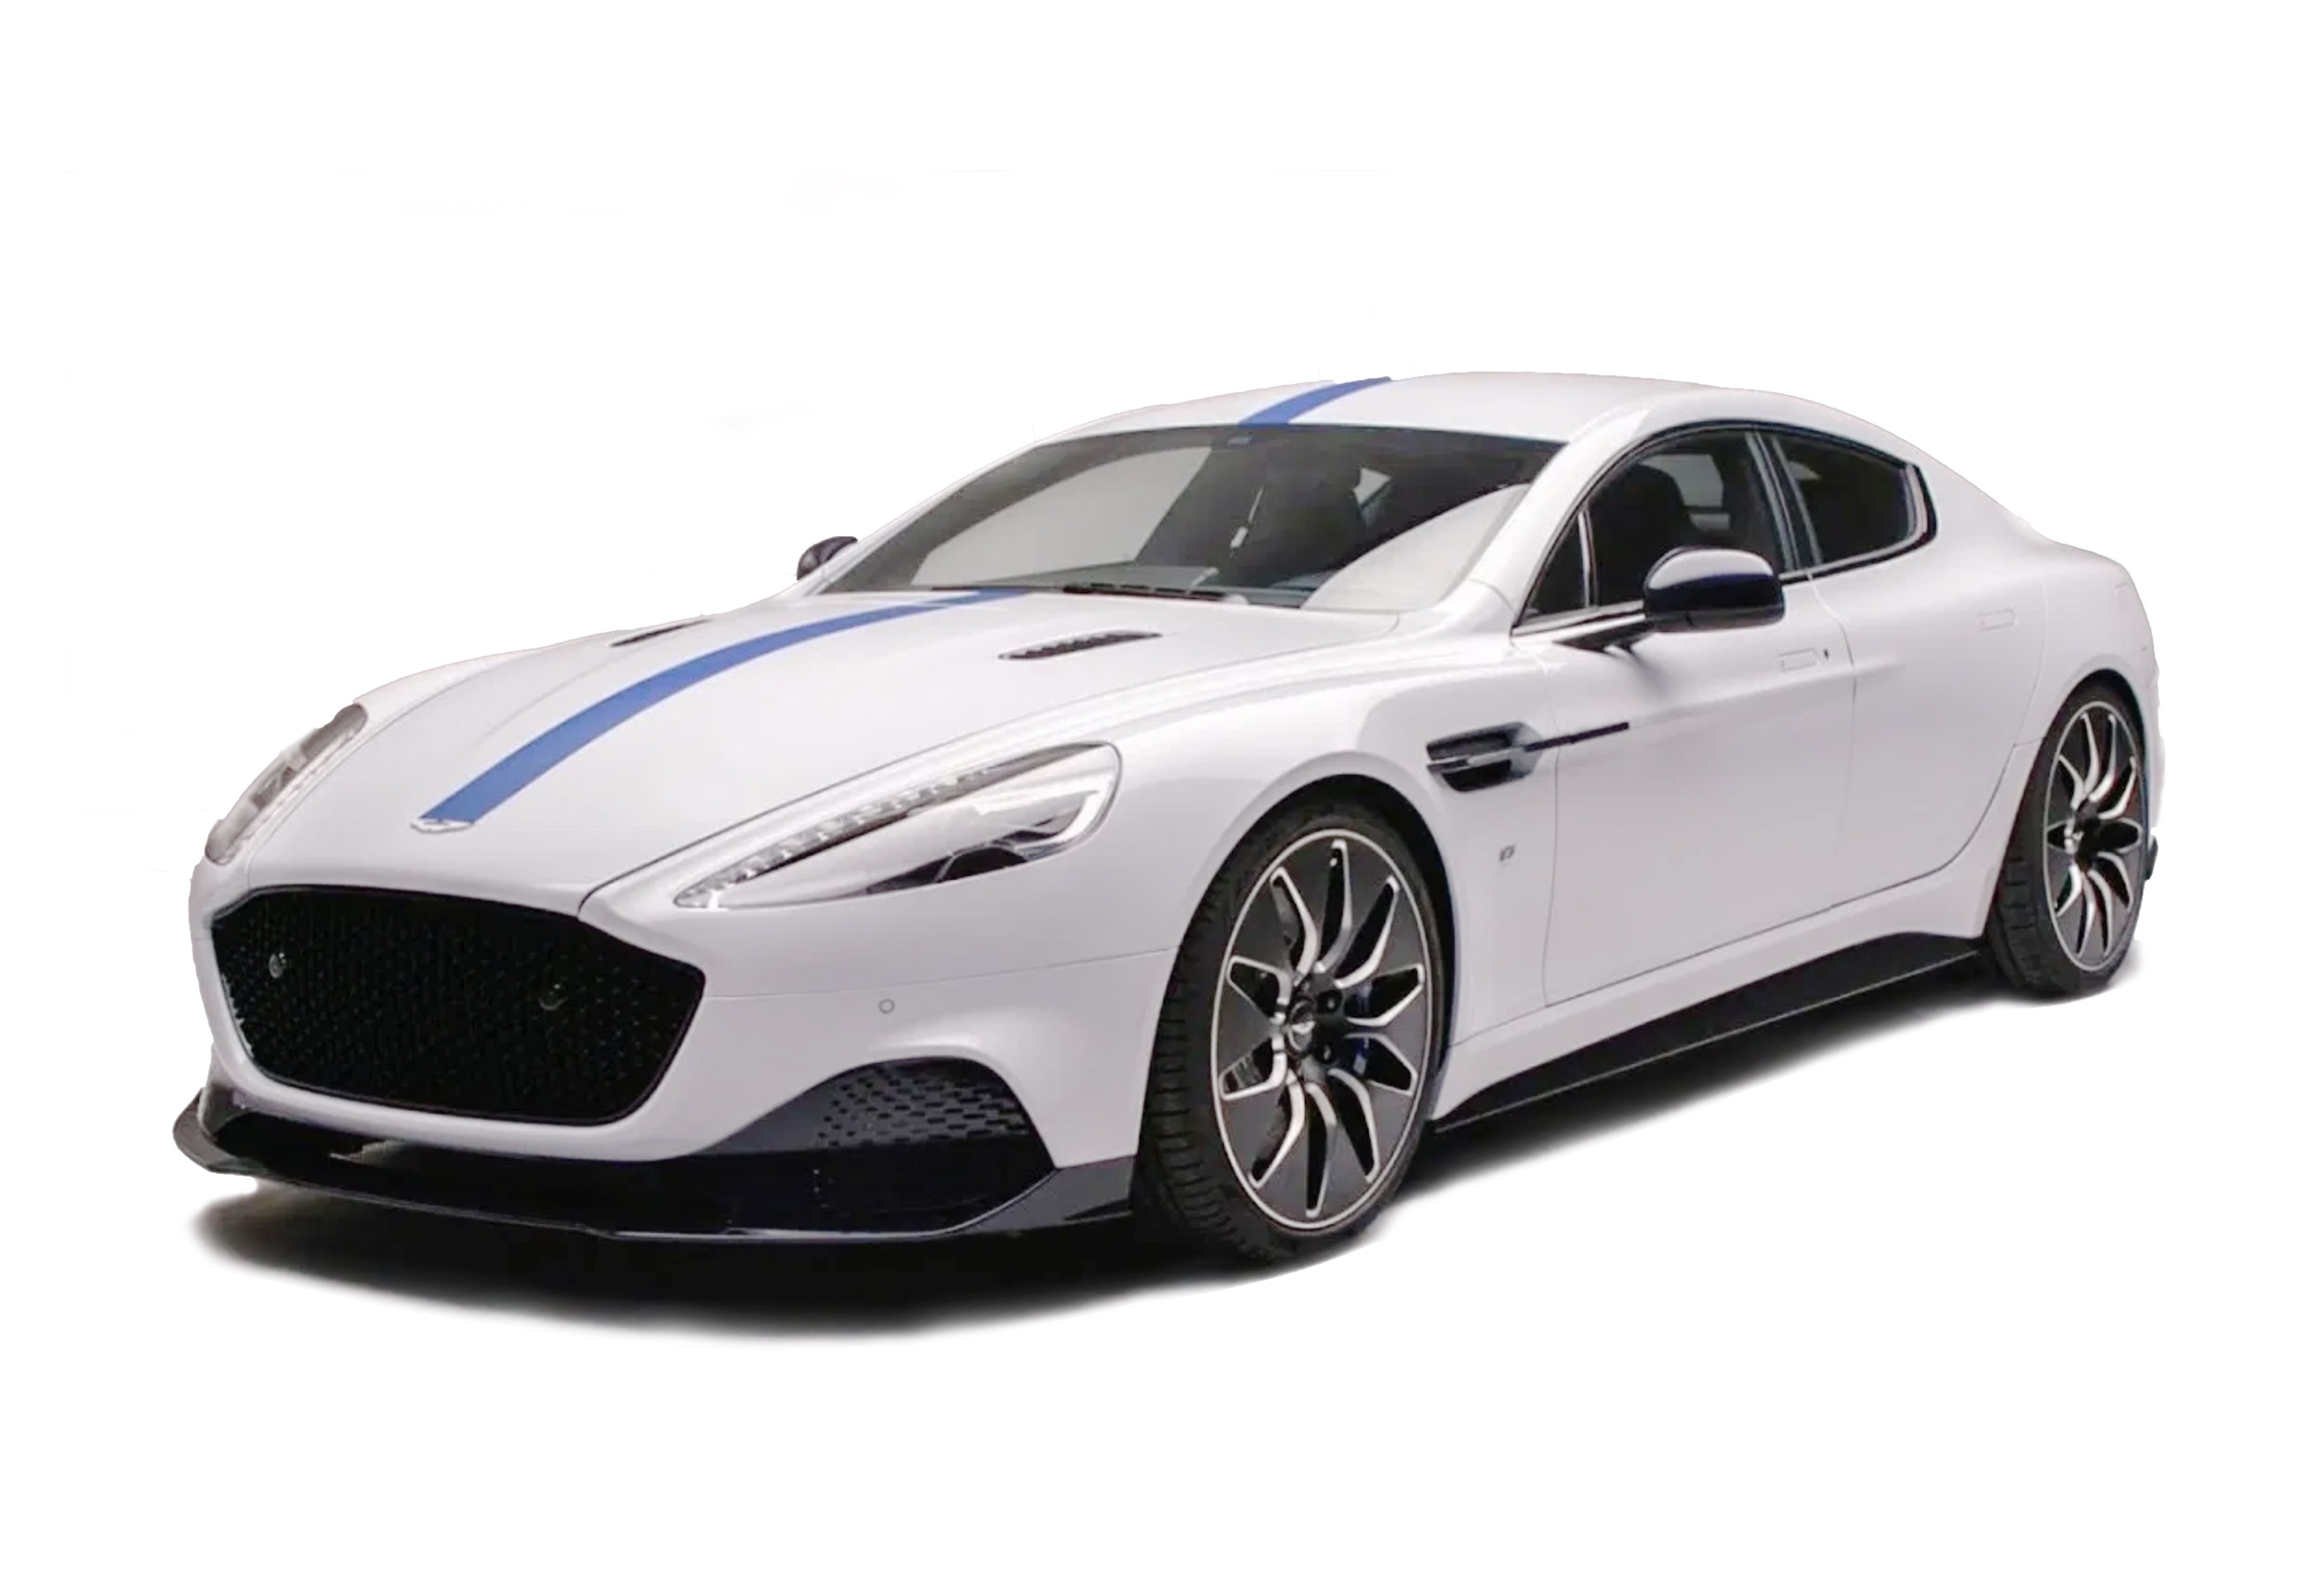 Charging your Aston Martin Rapid E